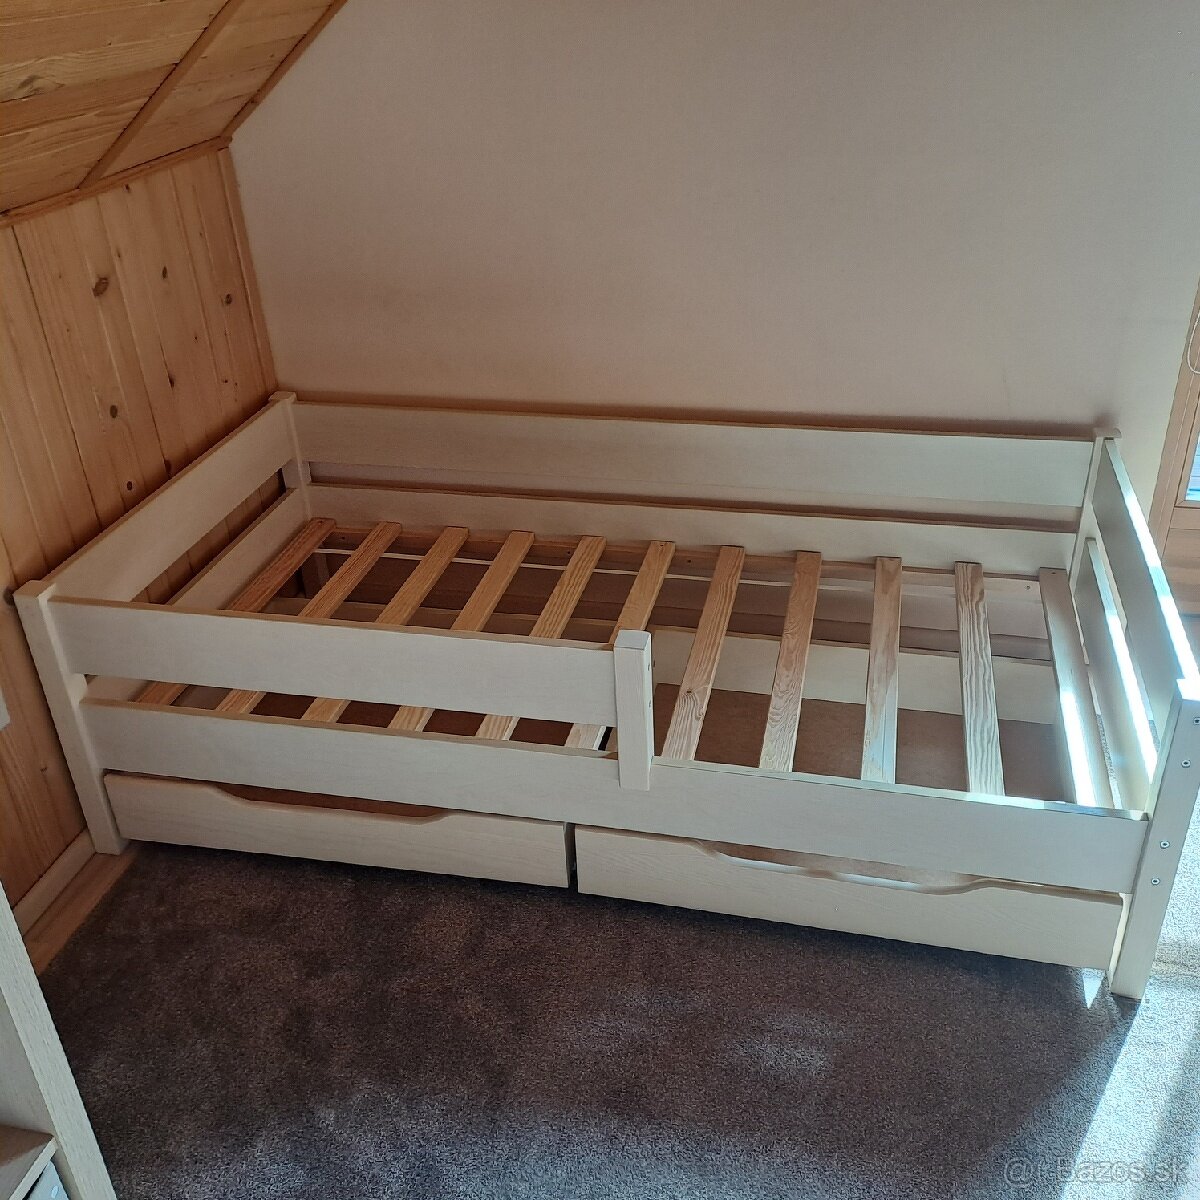 Detska postel 160x80, matrac, plachty, podlozka, mantinel